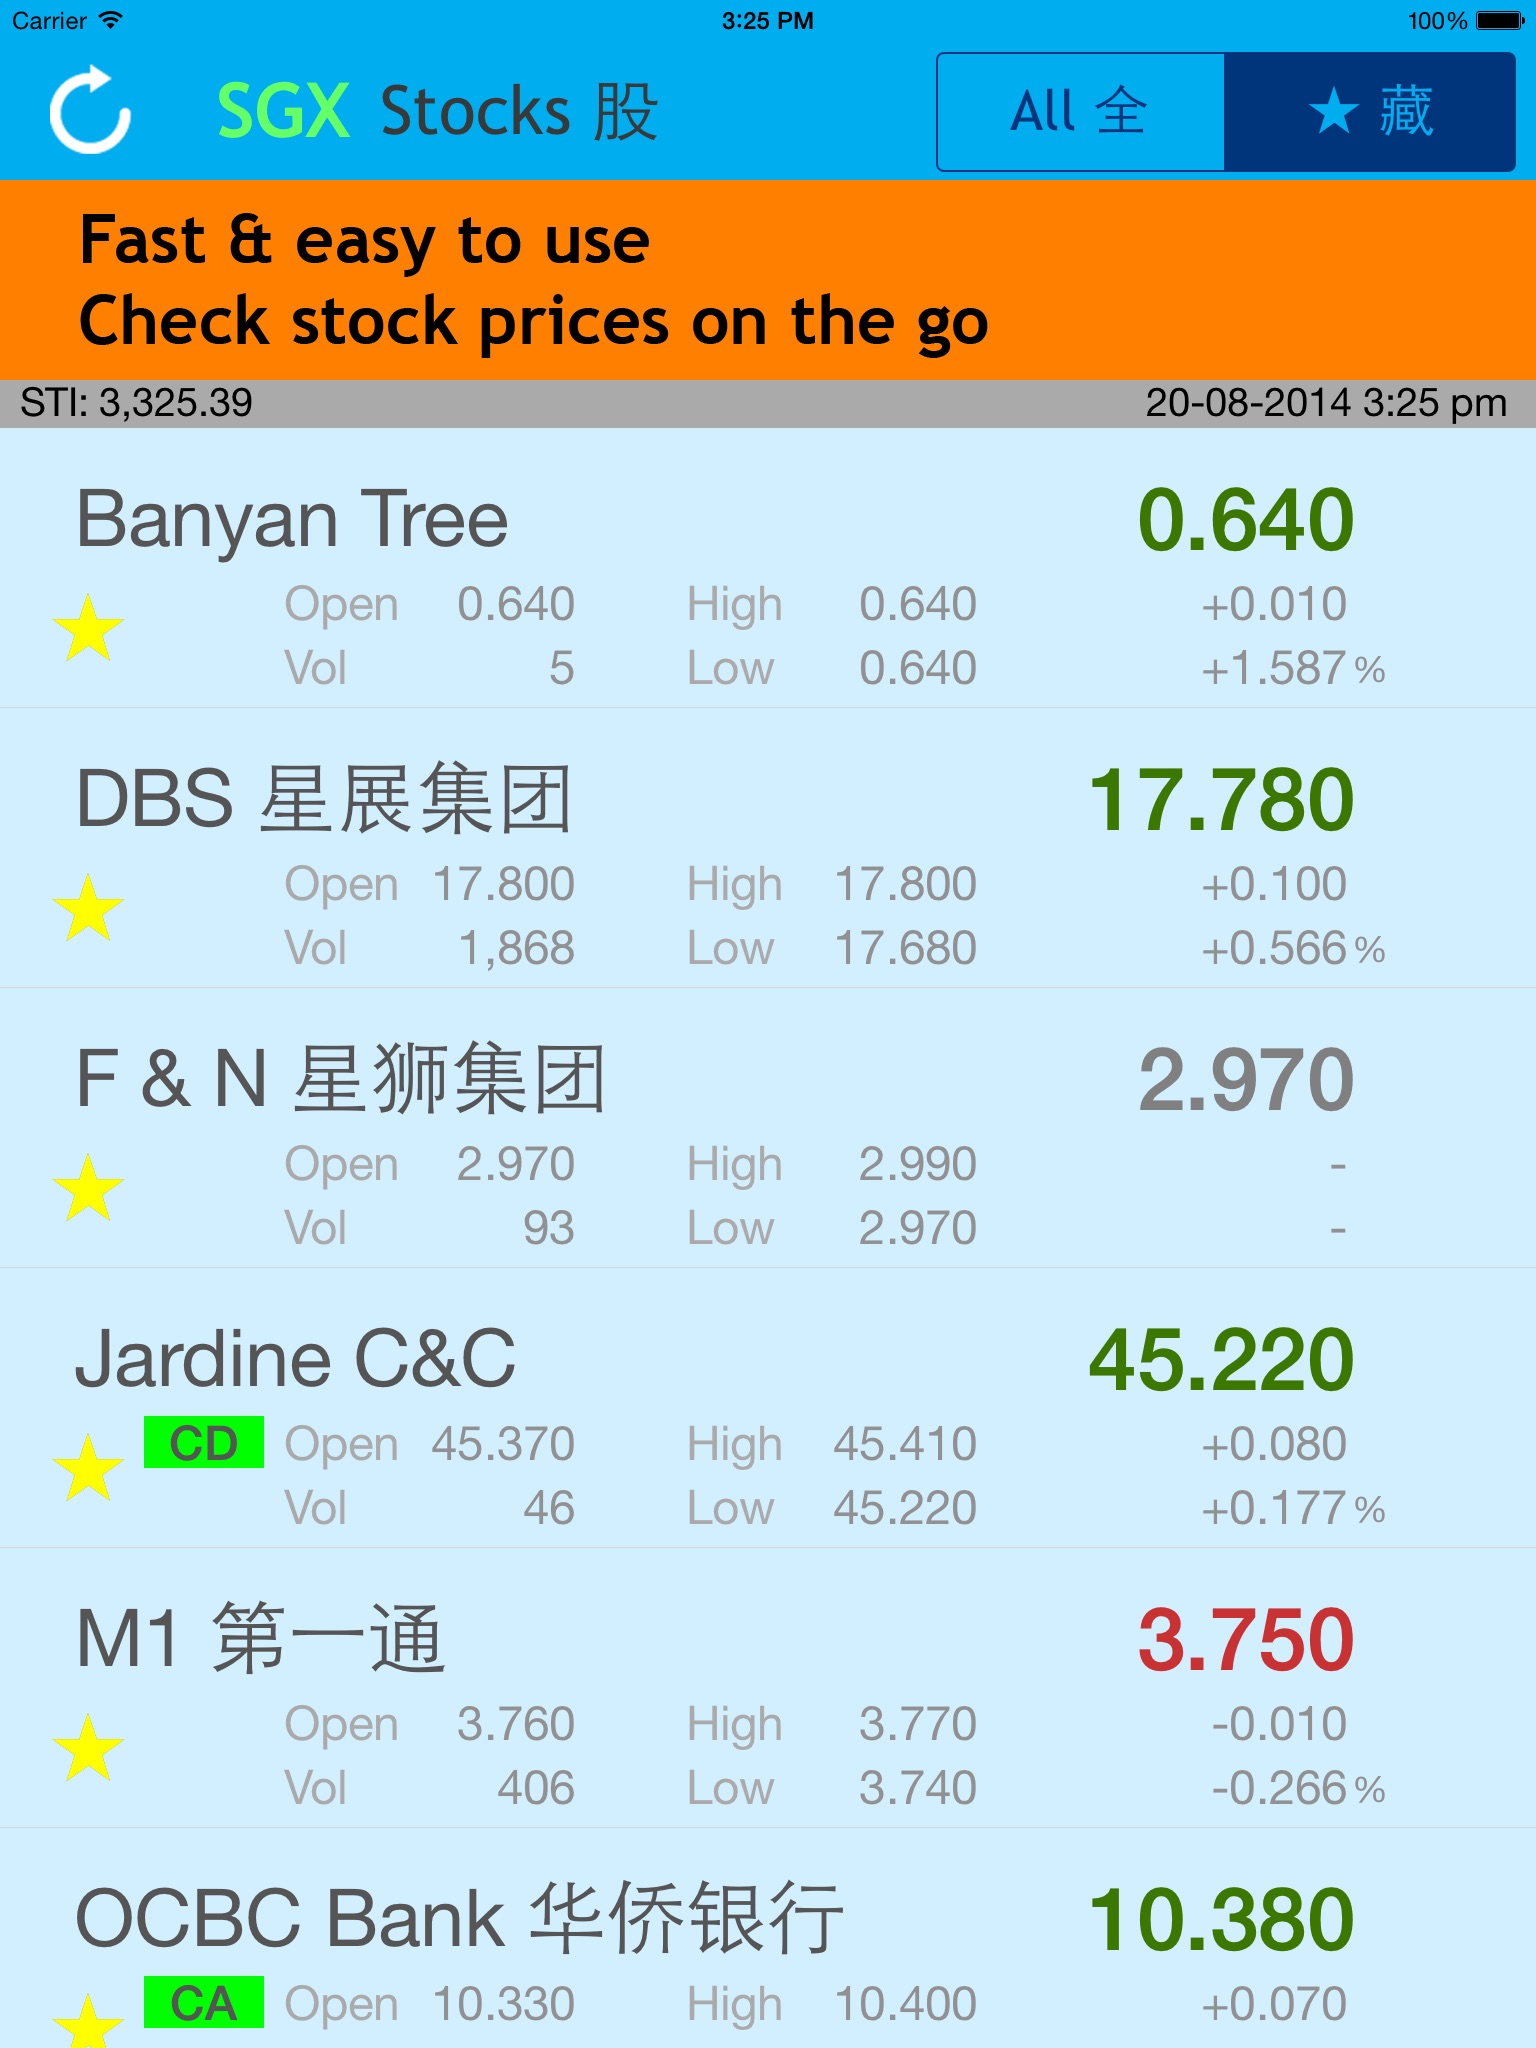 SGX Stocks for iPad screenshot 2